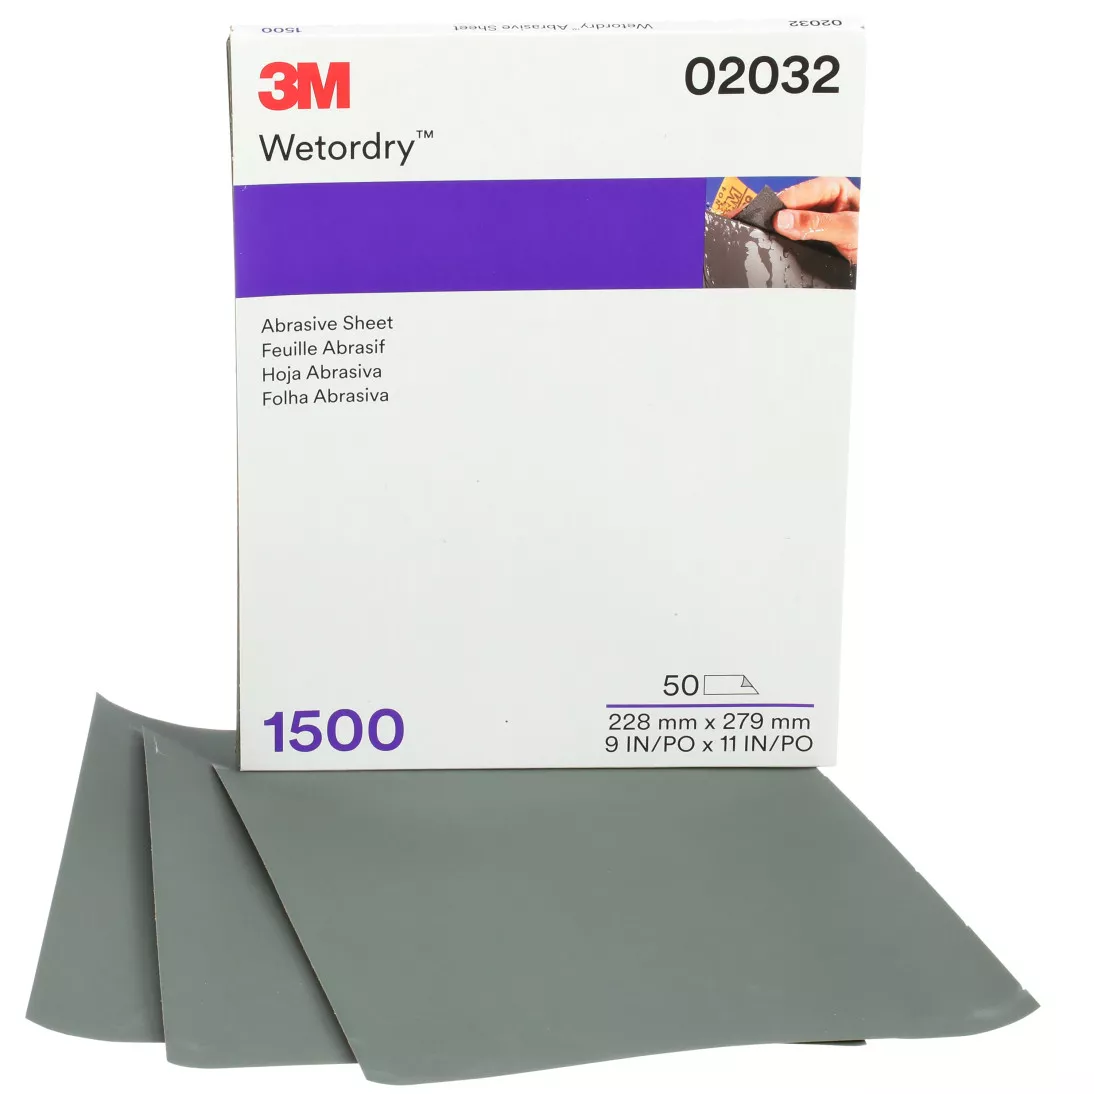 3M™ Wetordry™ Abrasive Sheet, 02032, 9 in x 11 in, 1500 grade, 50 sheets
per carton, 5 cartons per case